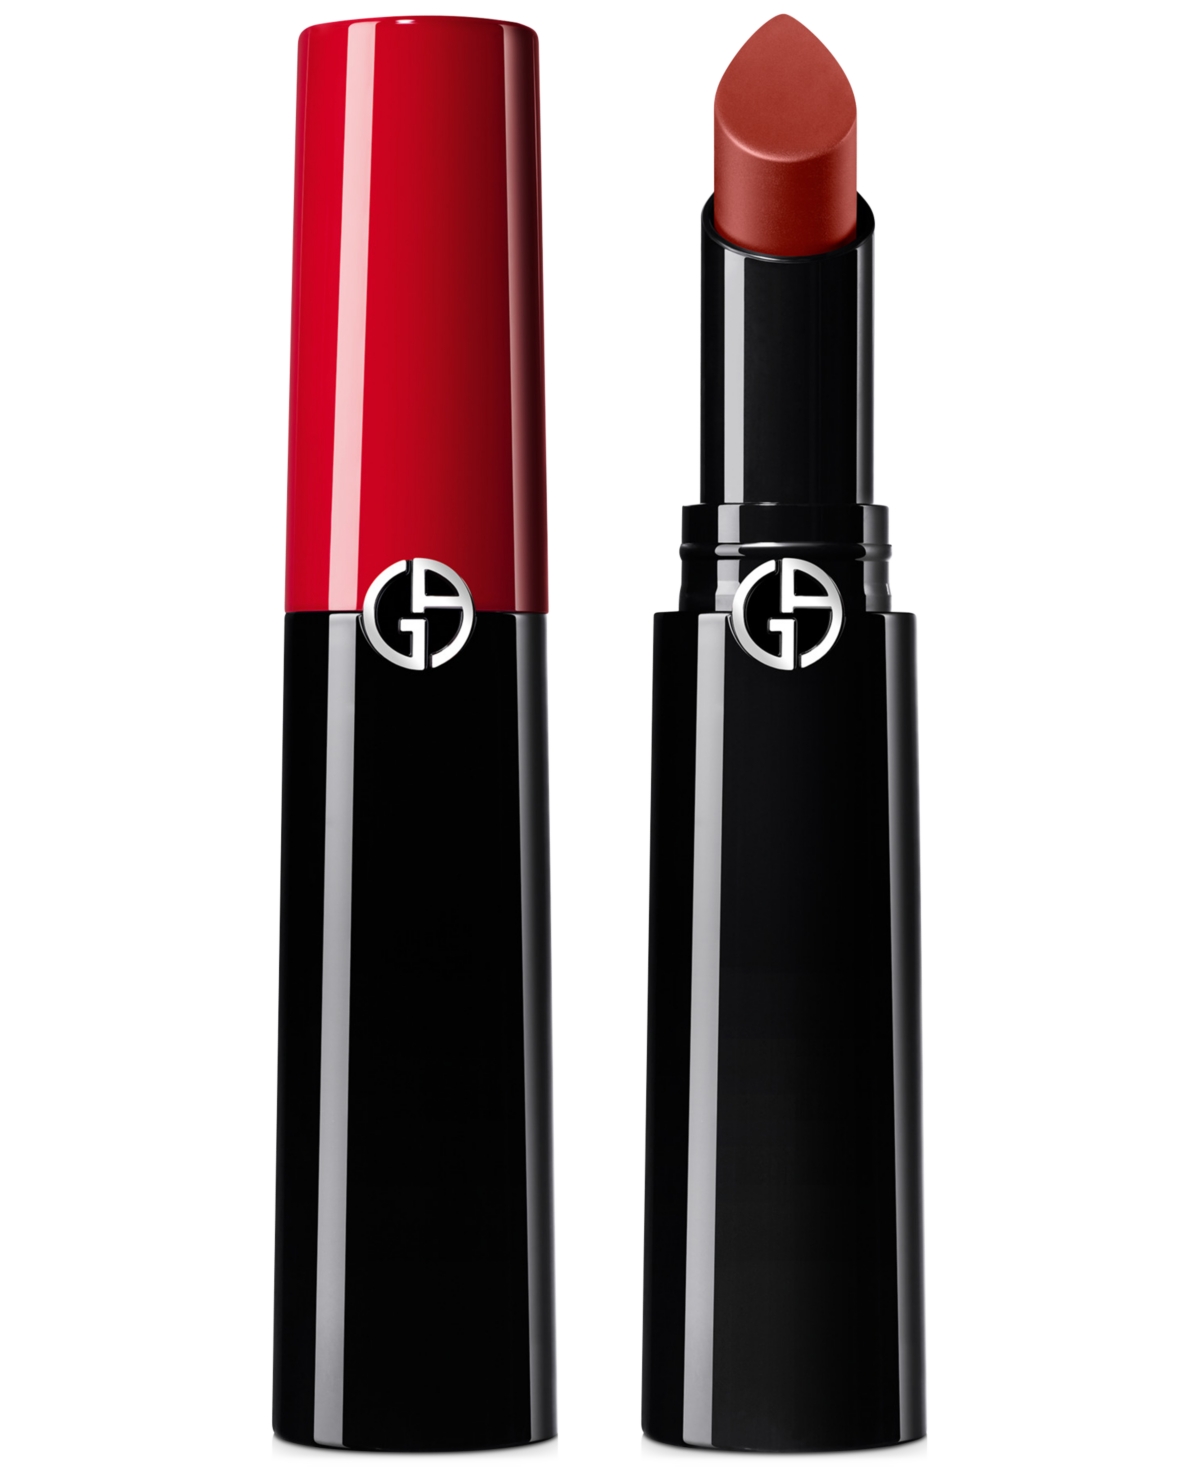 Armani Beauty Lip Power Long-Lasting Satin Lipstick - Sensual (Soft Beige)